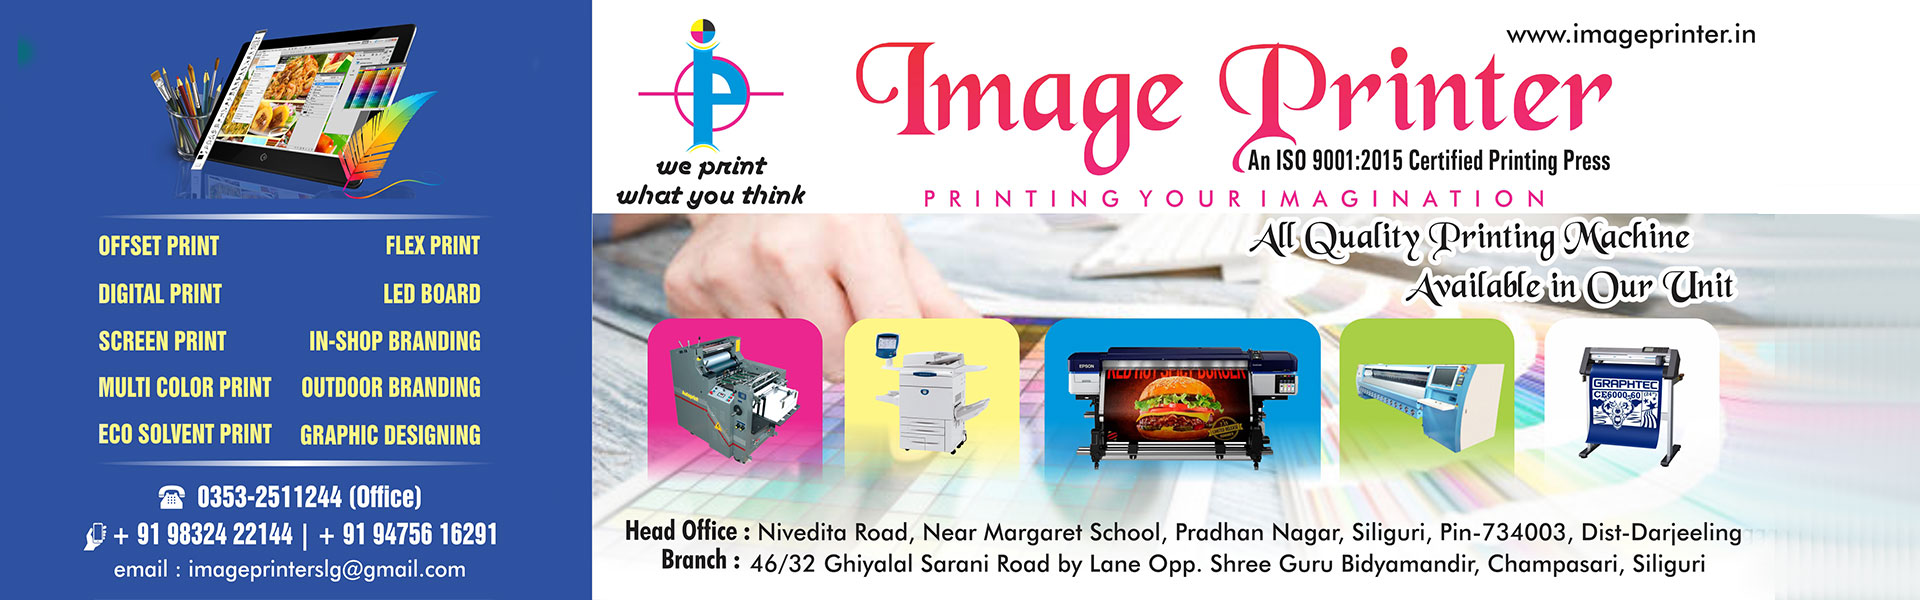 Image Printer